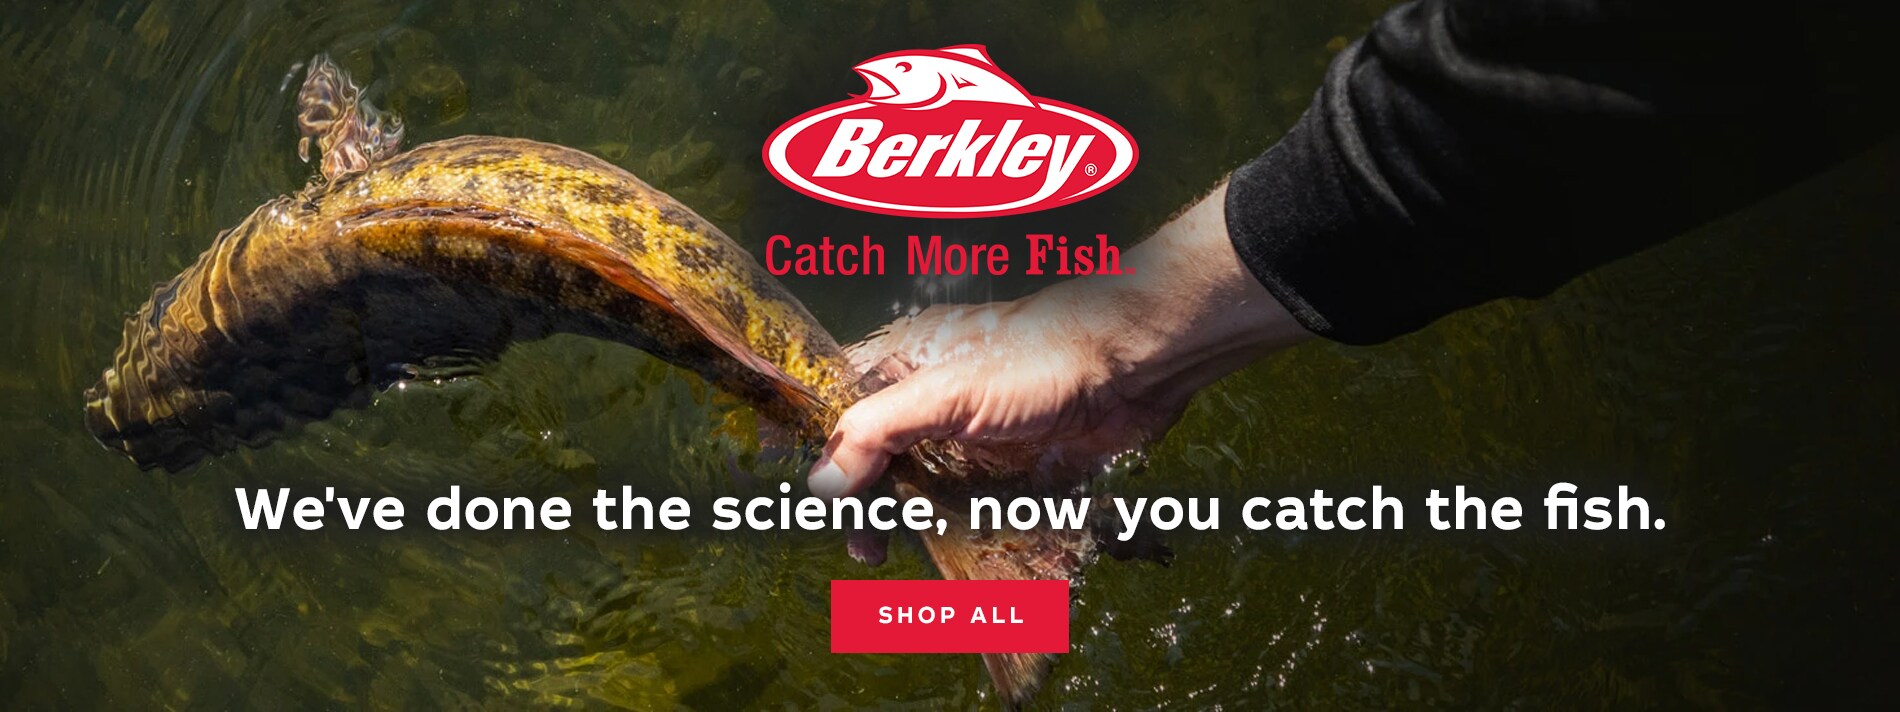 Berkley Fishing Gear, Fishing Tackle & Equipment - FishUSA